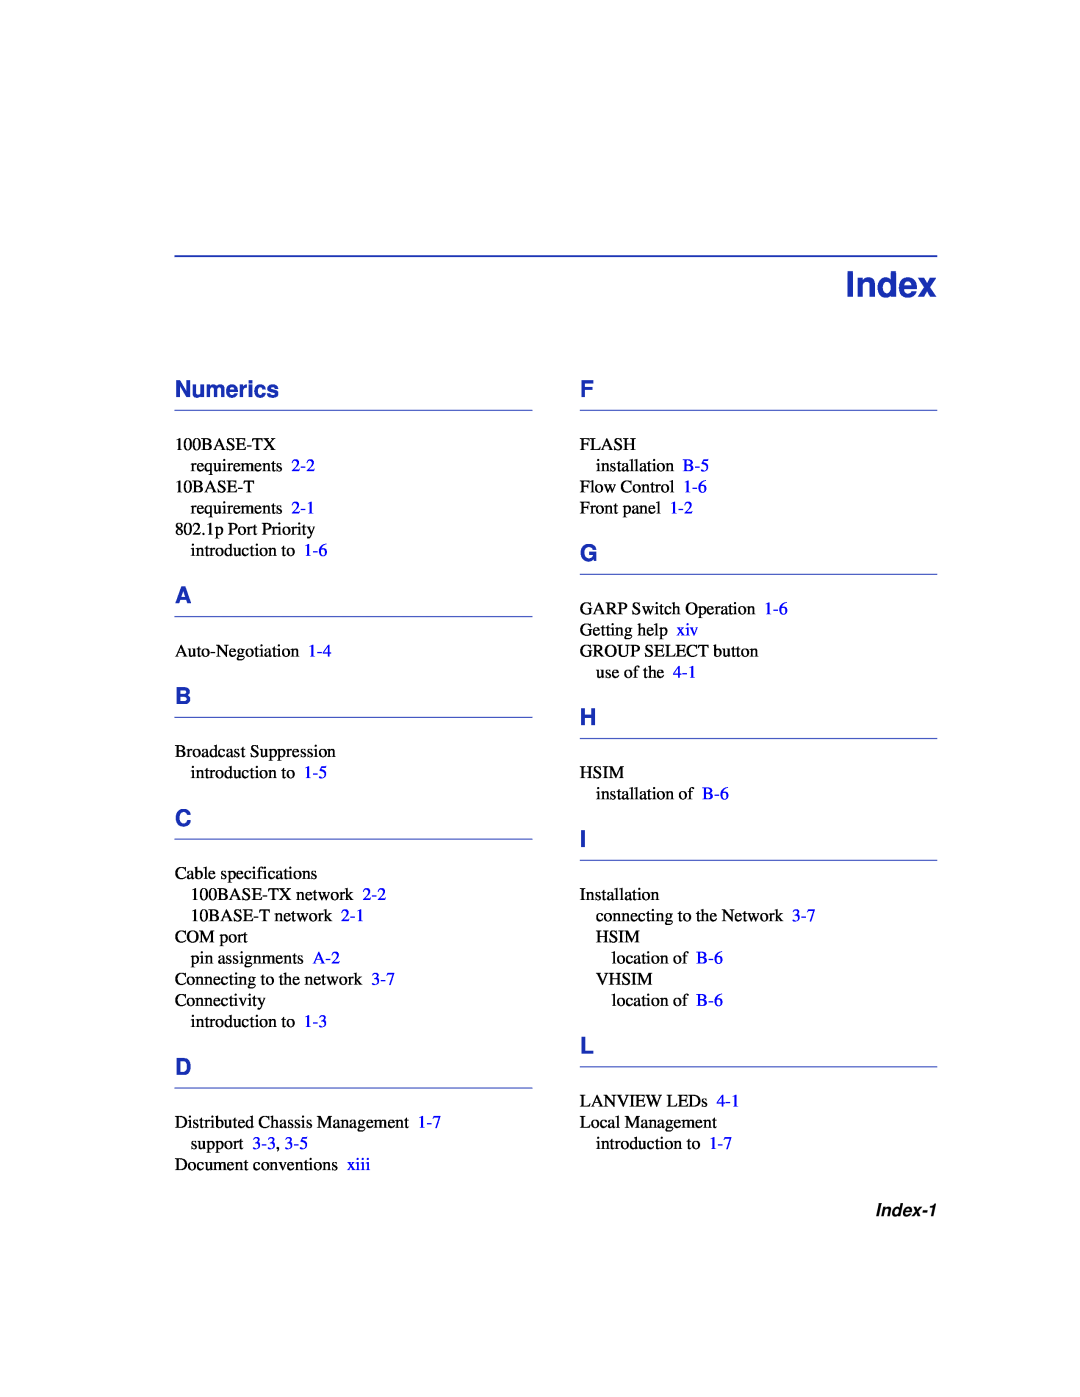 Enterasys Networks 6H352-25 manual Index, Numerics 